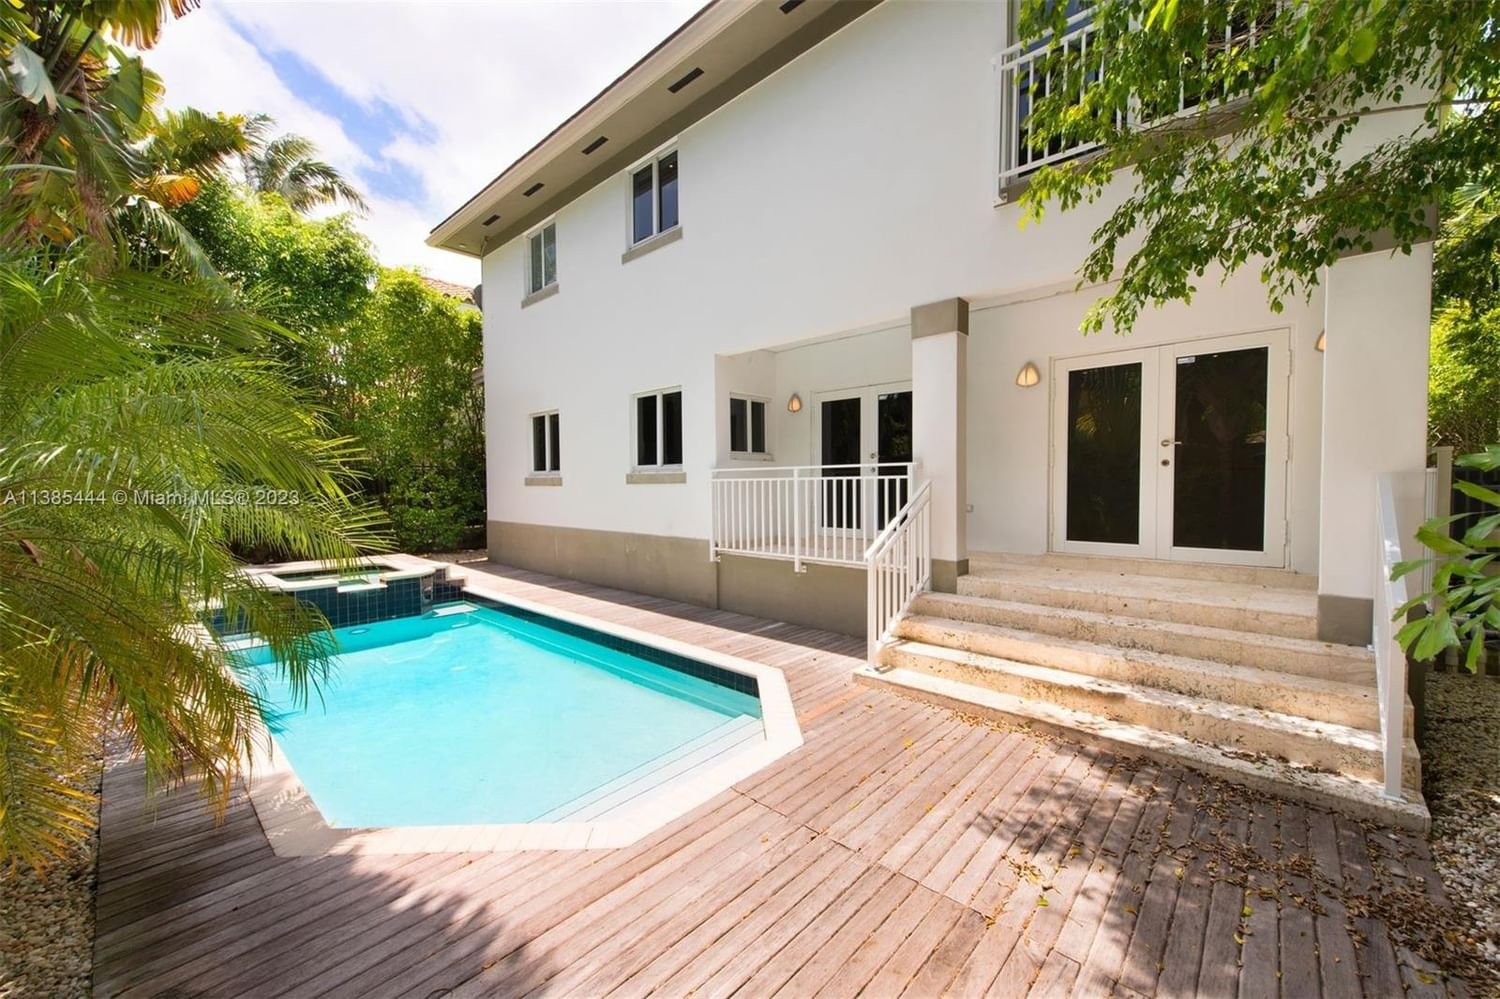 Real estate property located at 4415 Bay Rd, Miami-Dade County, Miami Beach, FL